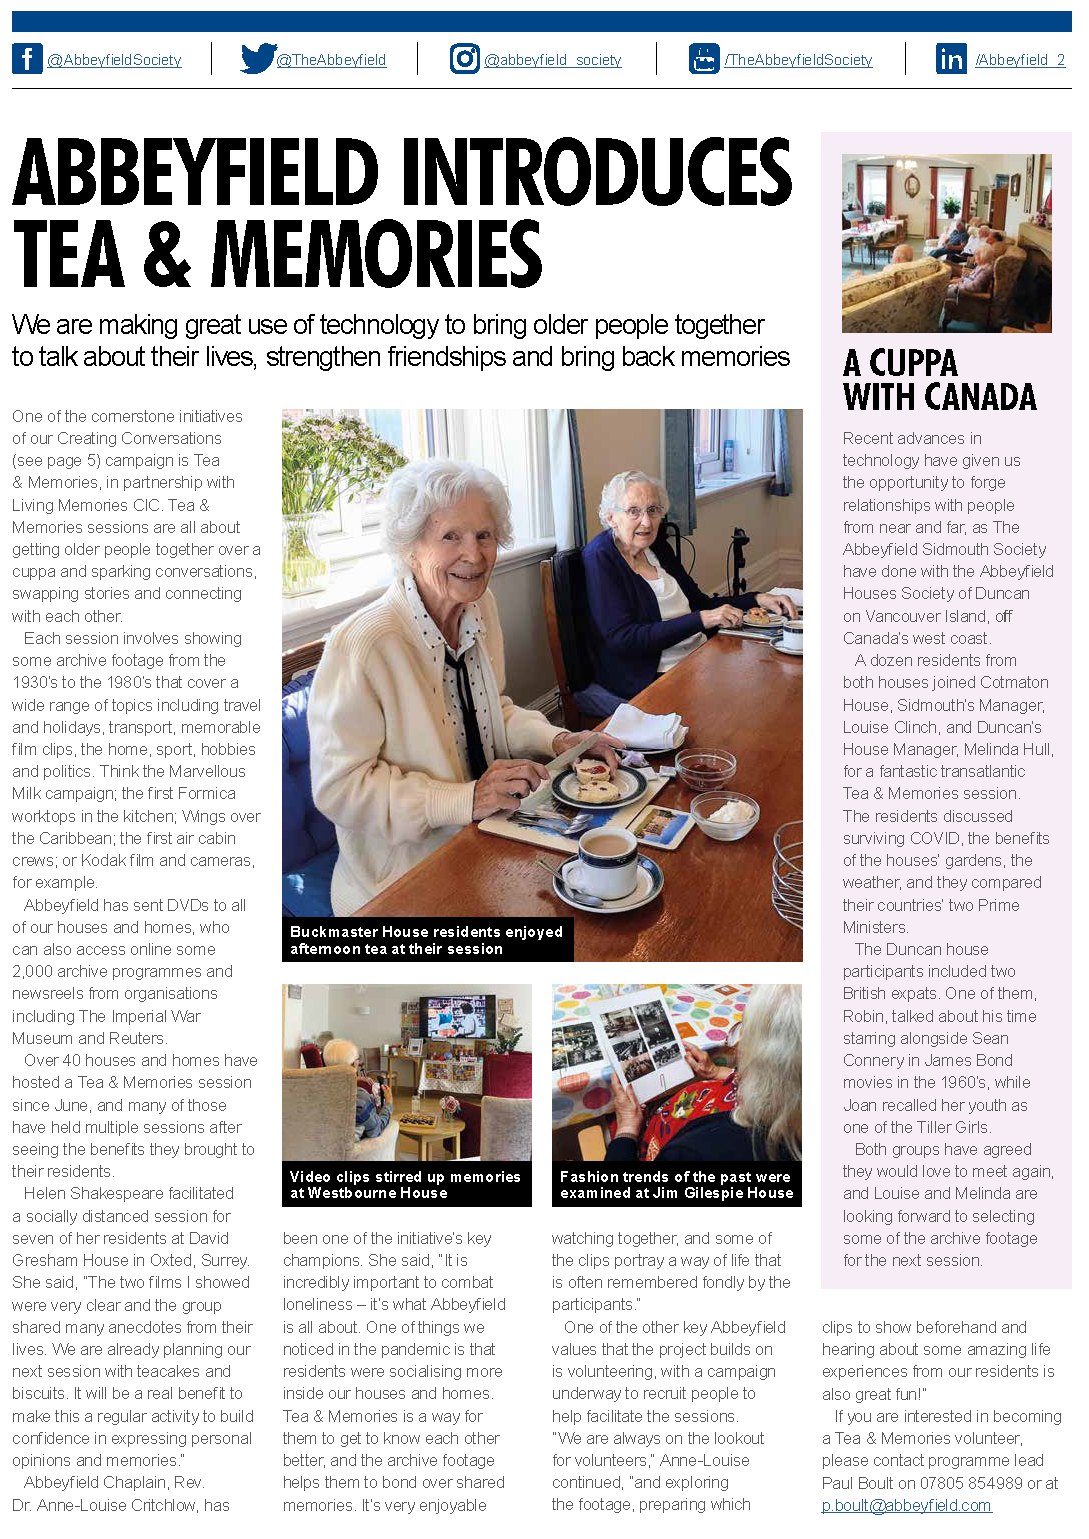 Abbeyfield Voice - Tea & Memories article